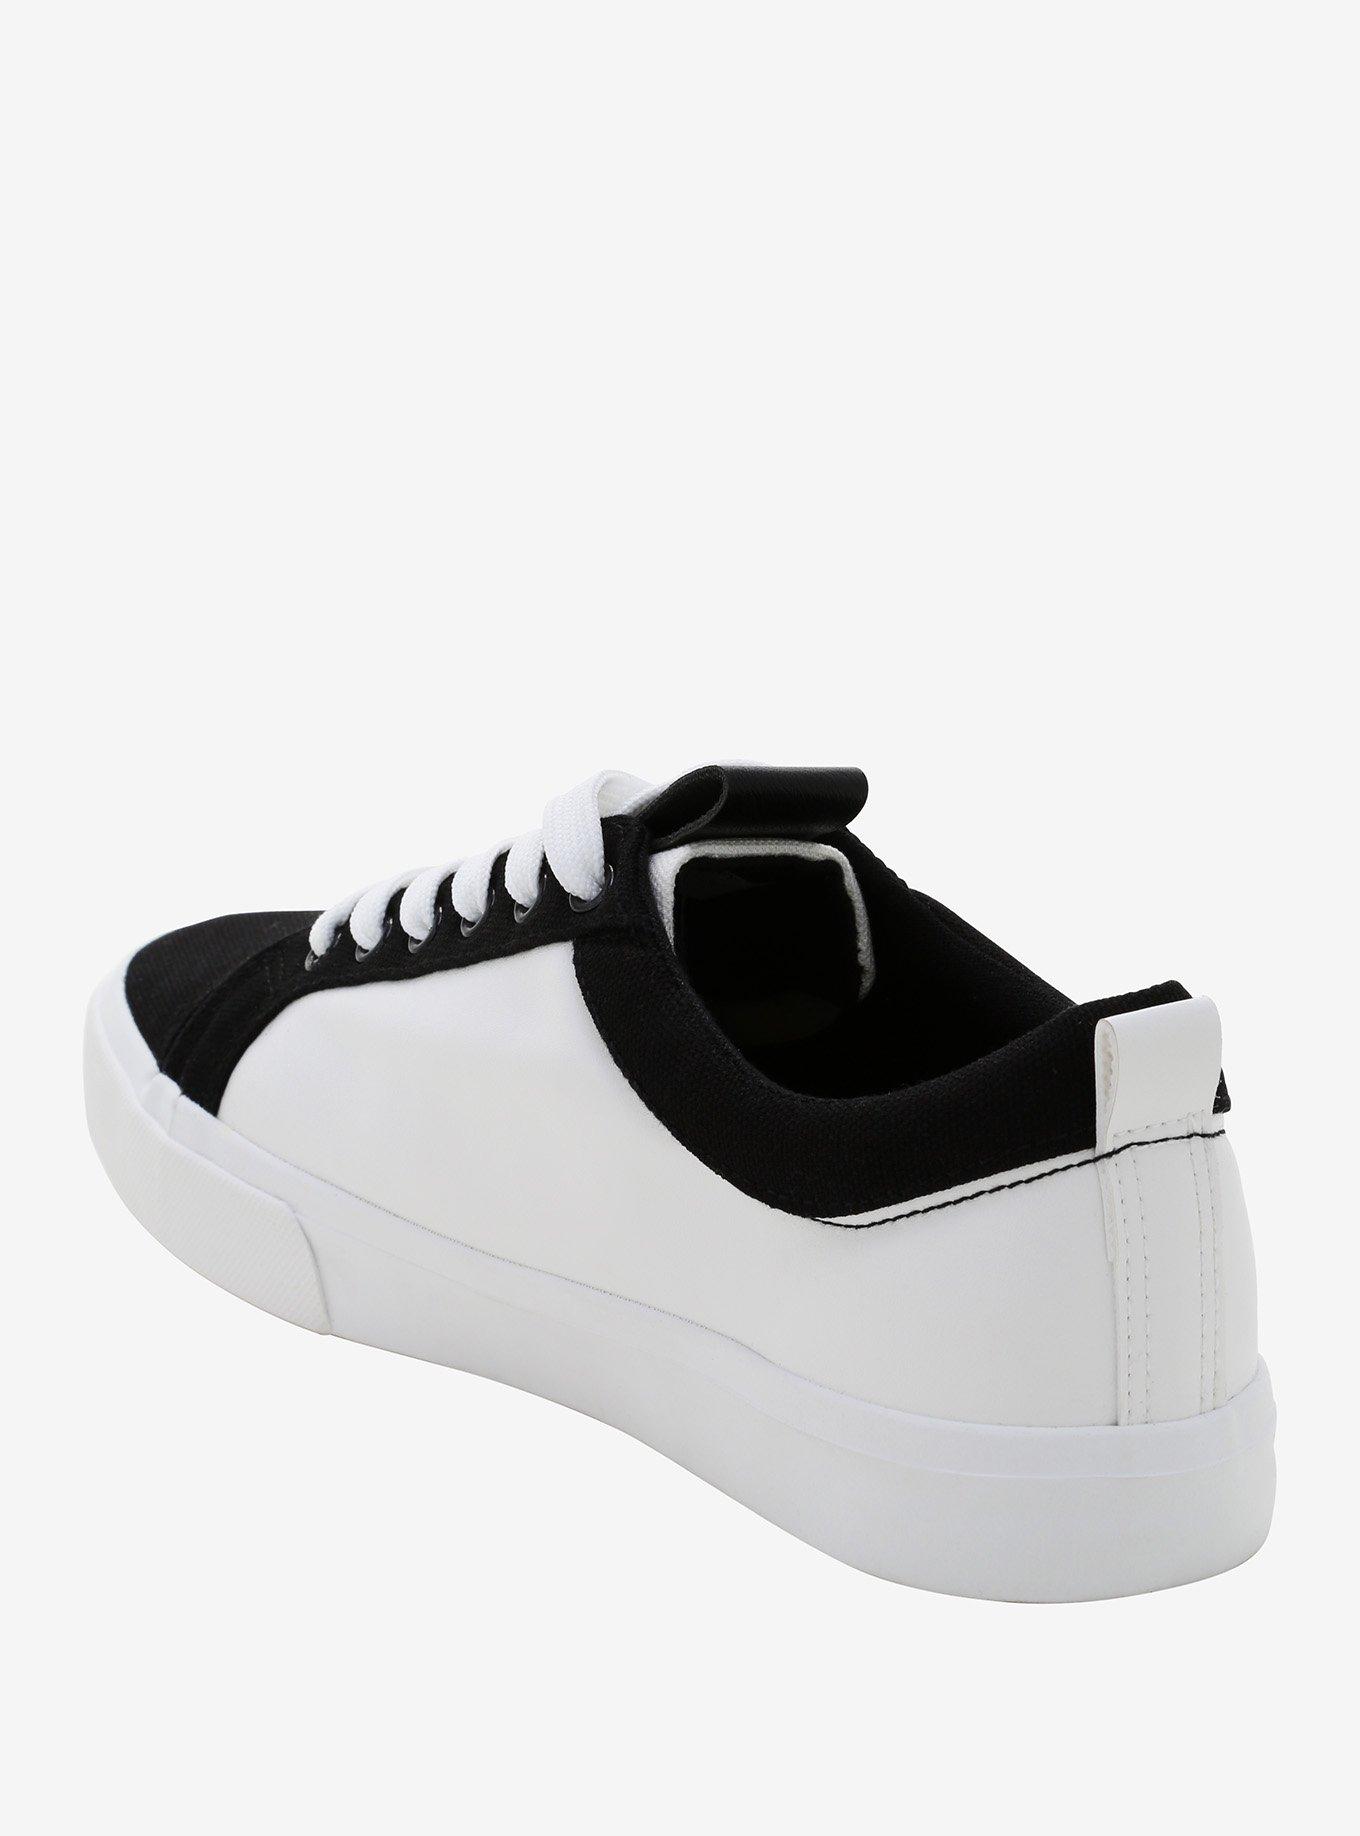 Disney Mickey Mouse Black & White Sneakers, MULTI, alternate